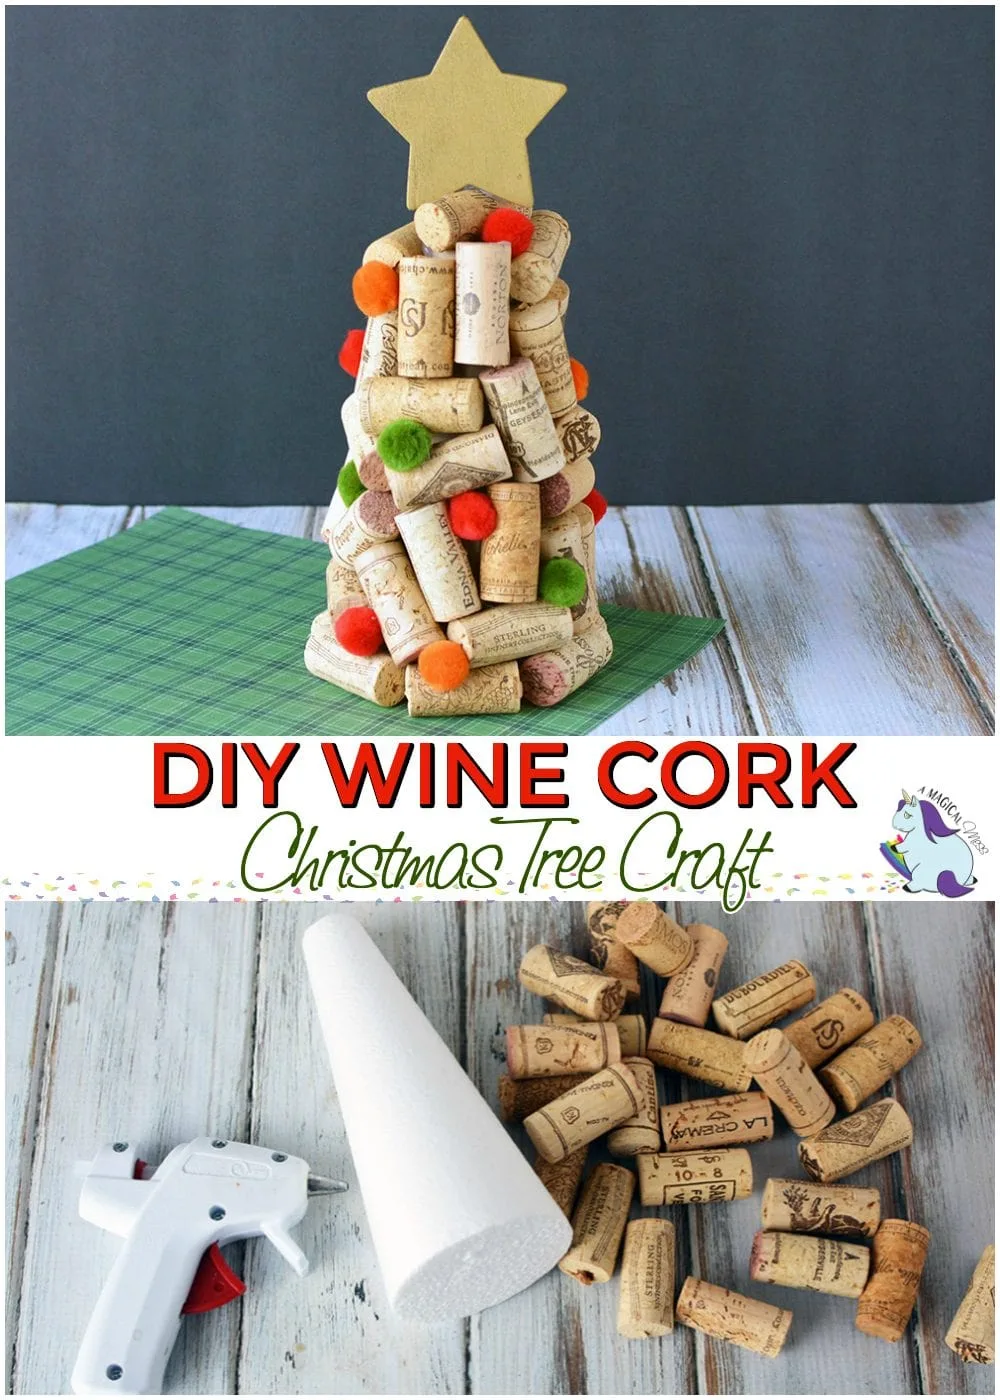 DIY Wine Cork Christmas Trees Craft